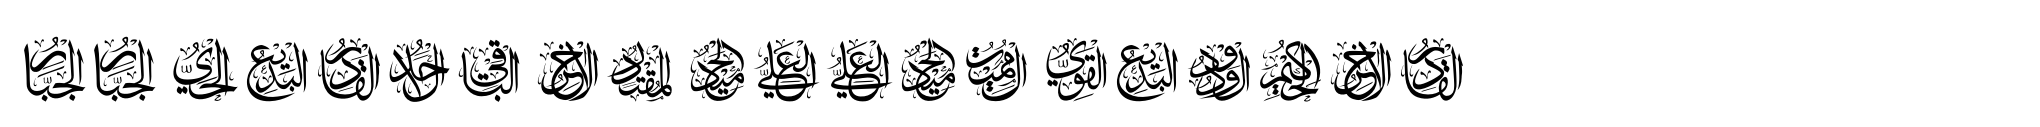 99 Names of ALLAH Random image